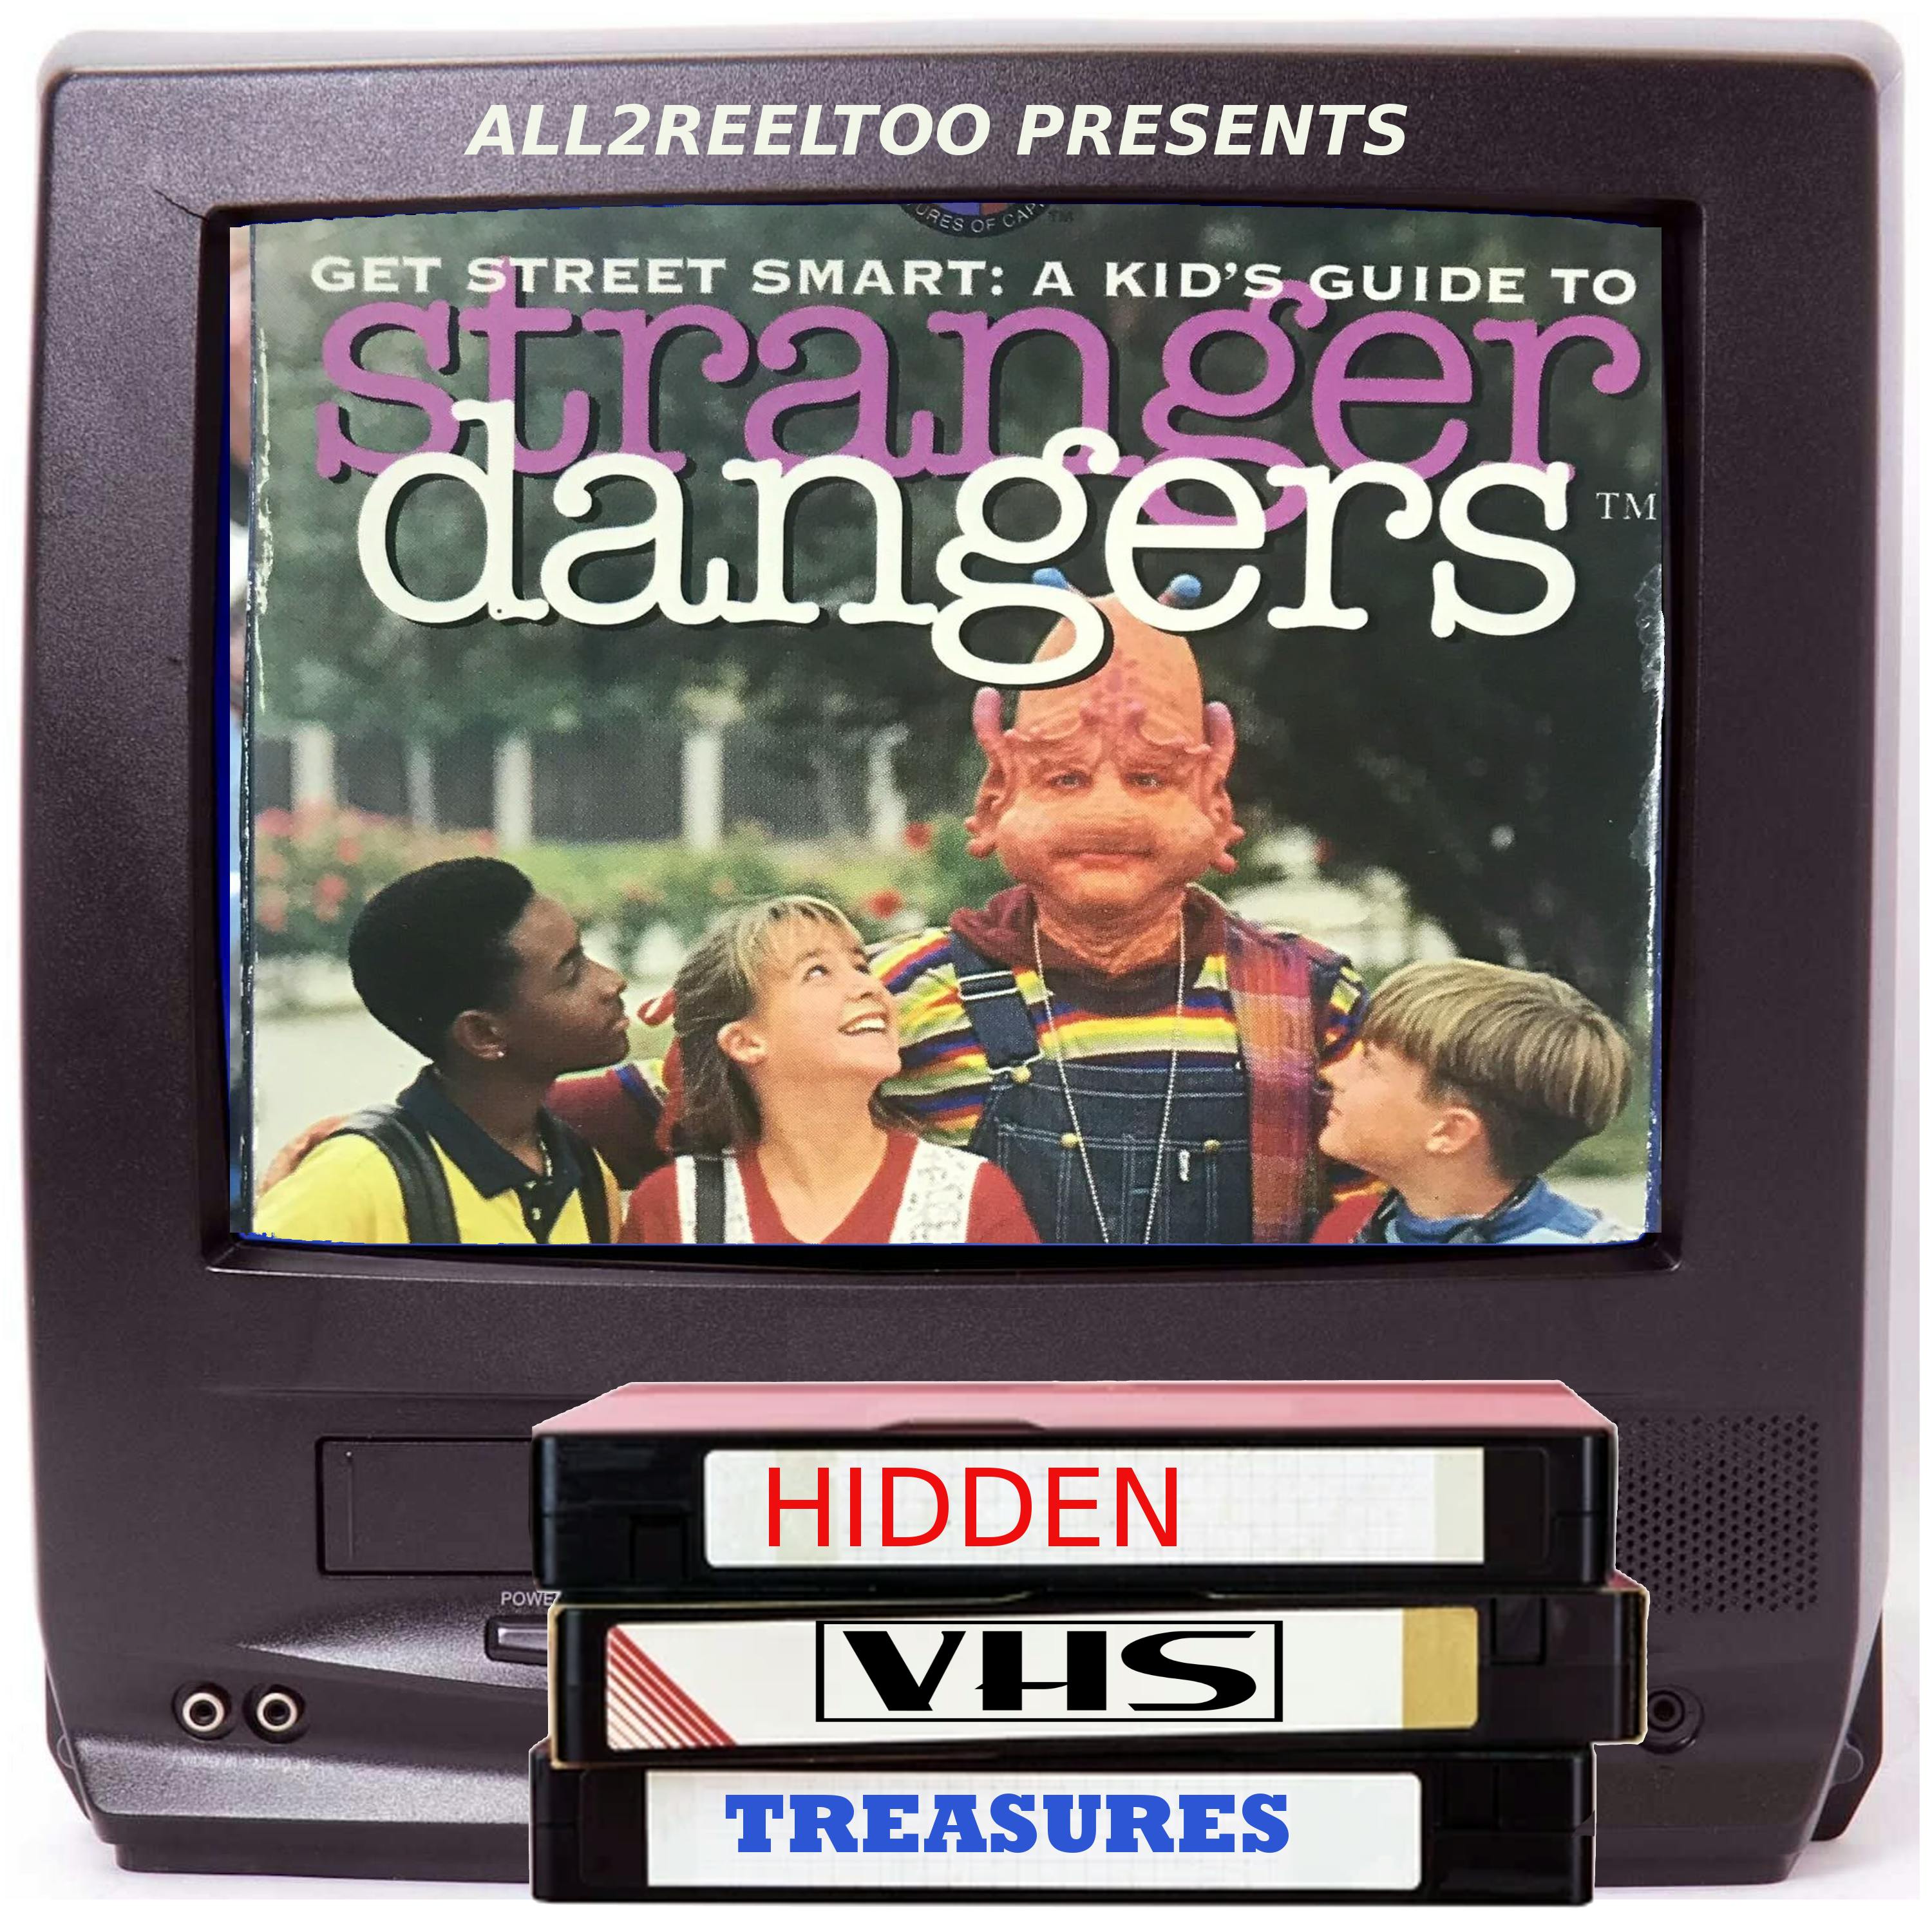 Get Street Smart: A Kid's Guide To Stranger Dangers (1995) - HIDDEN VHS TREASURES Image